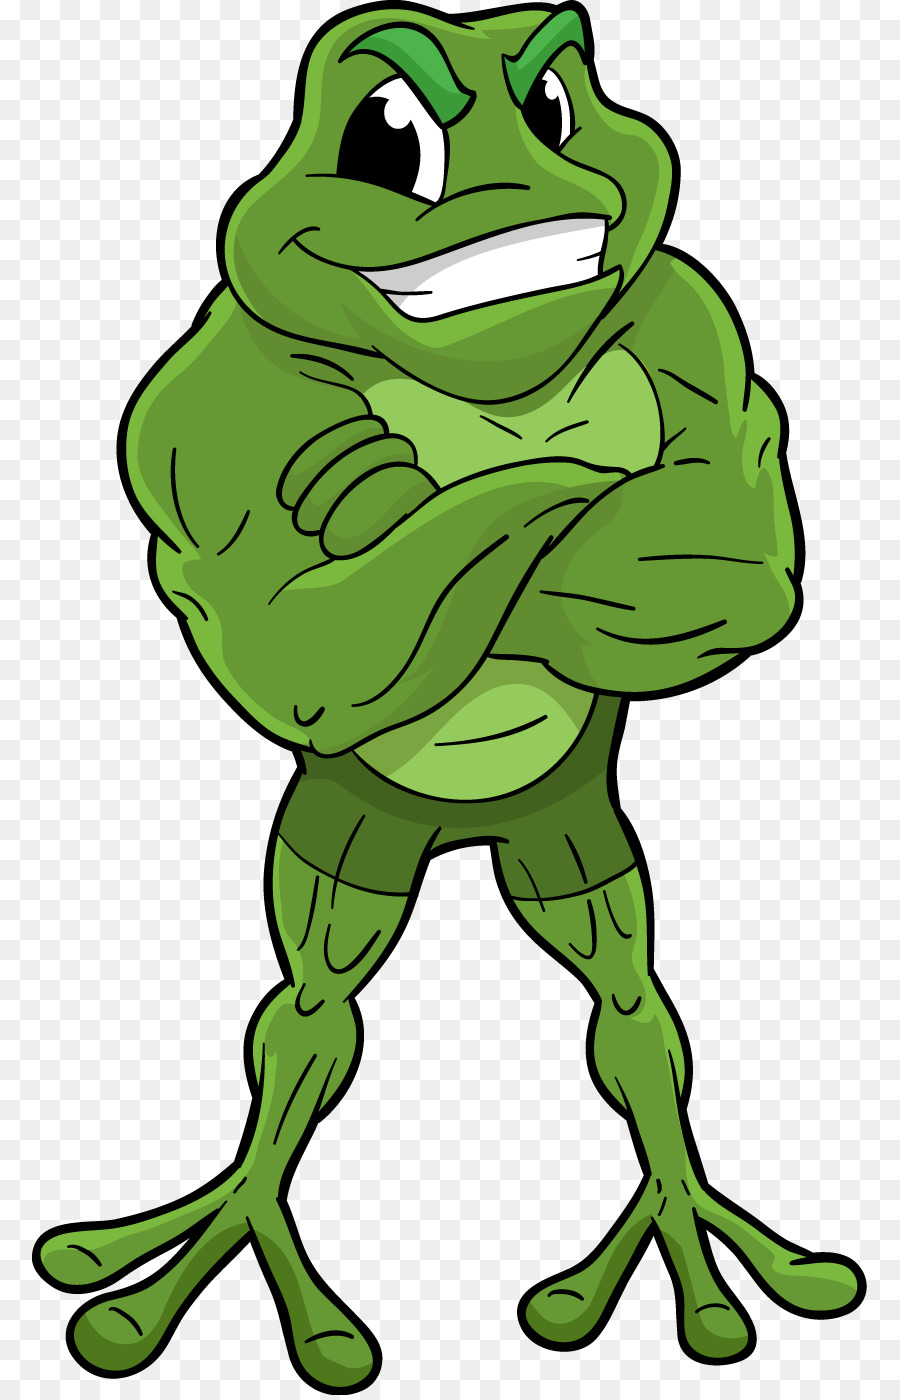 kisspng-american-bullfrog-gigging-frog-legs-clip-art-strong-frog-cliparts-5ab4bf43000928.9528892515217948830002.jpg